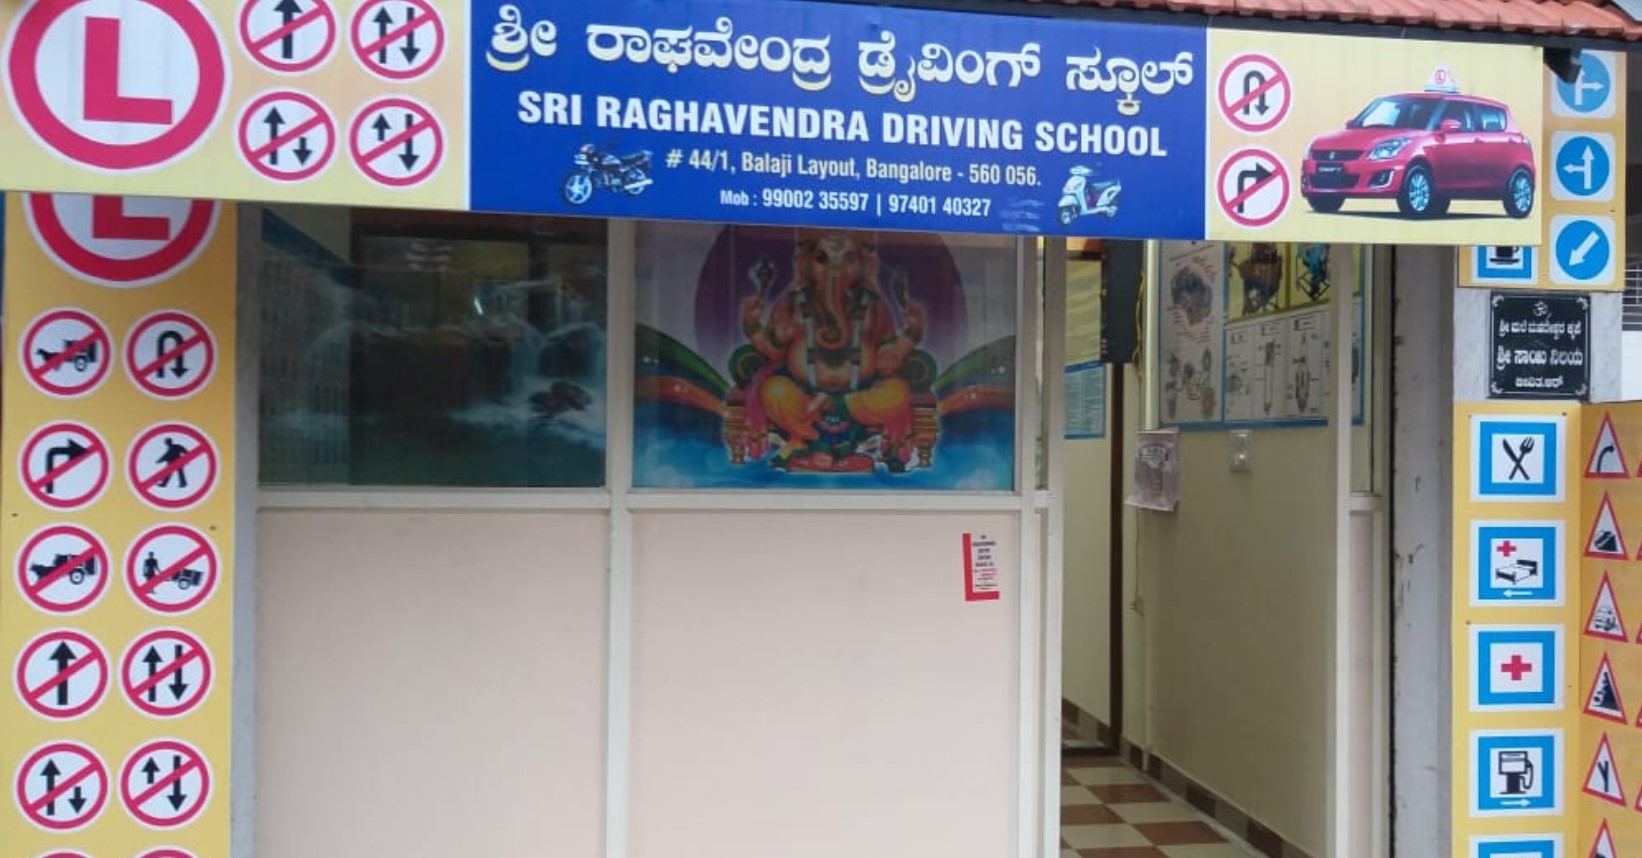 Sri raghavendra driving school in Mallathahalli